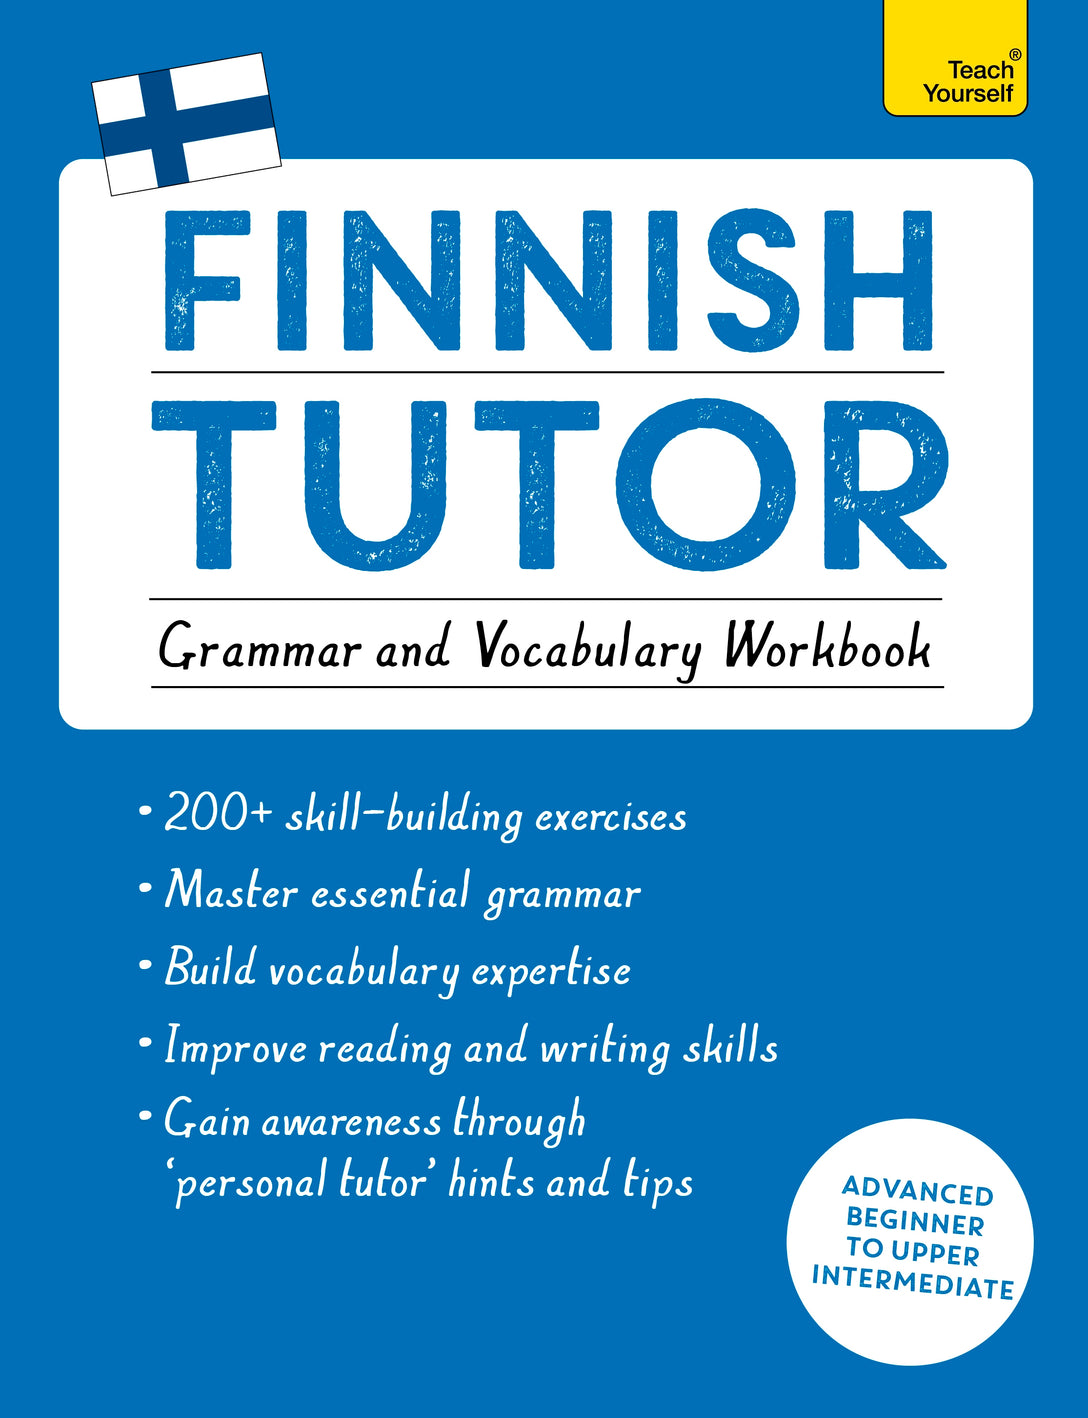 Finnish Tutor: Grammar and Vocabulary Workbook (Learn Finnish with Teach Yourself) by Riitta-Liisa Valijärvi